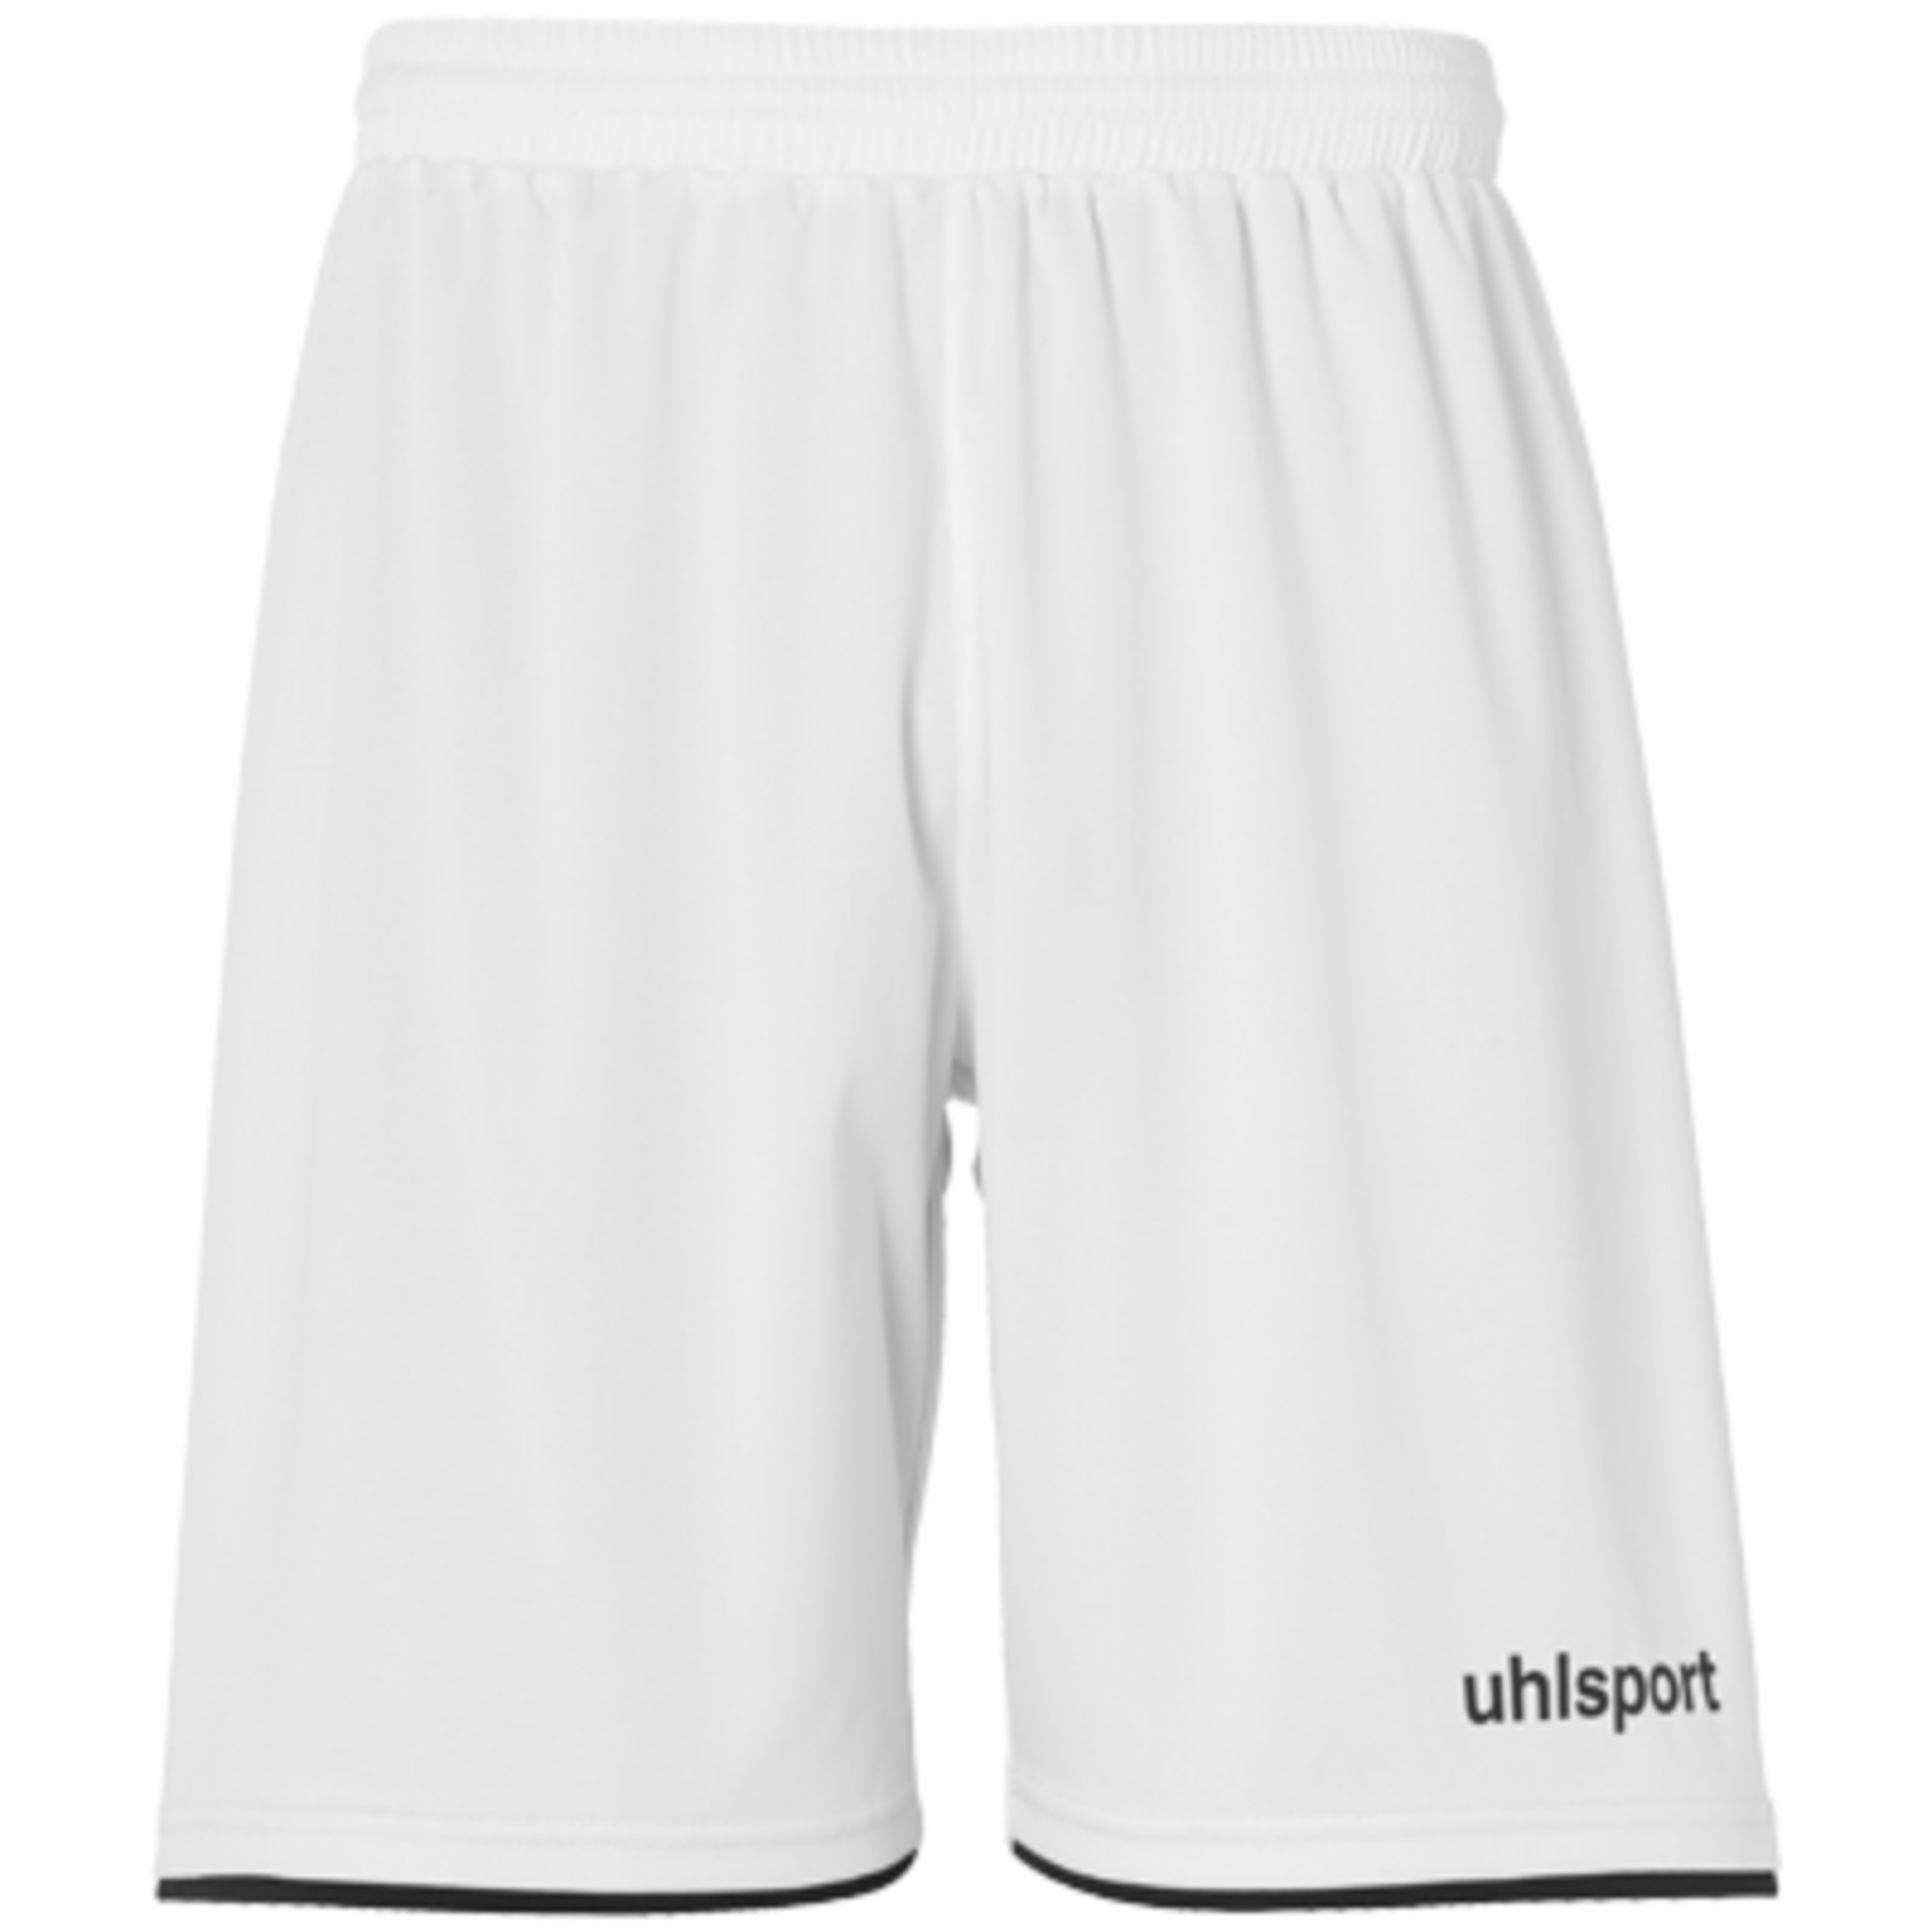 Club Shorts Blanco/negro Uhlsport - negro-blanco - 